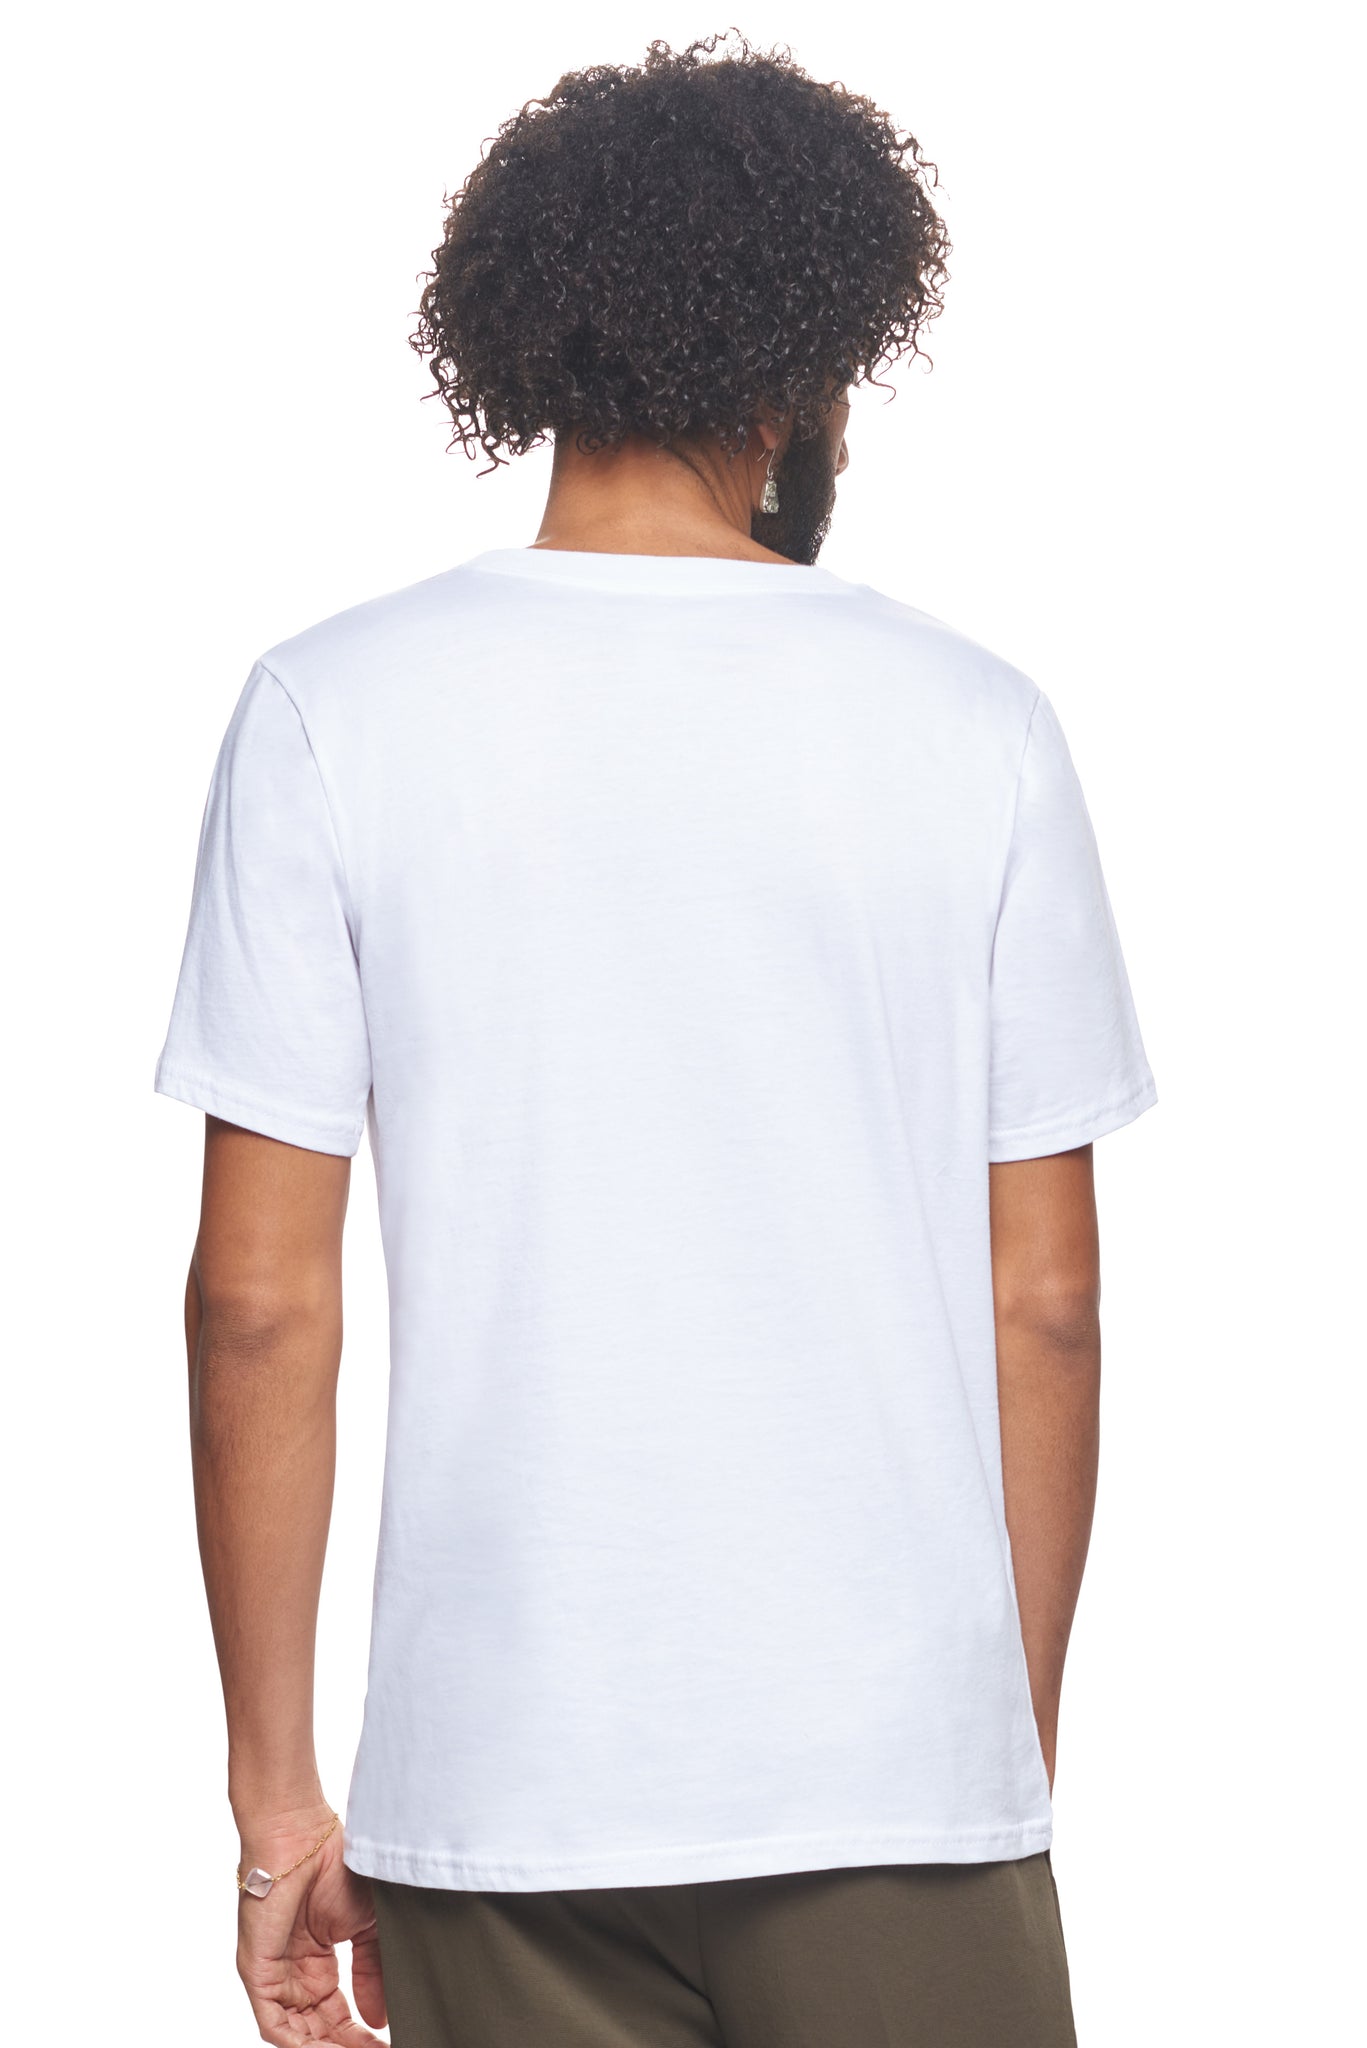 Expert Brand Wholesale Blank Organic Cotton T-Shirt Unisex